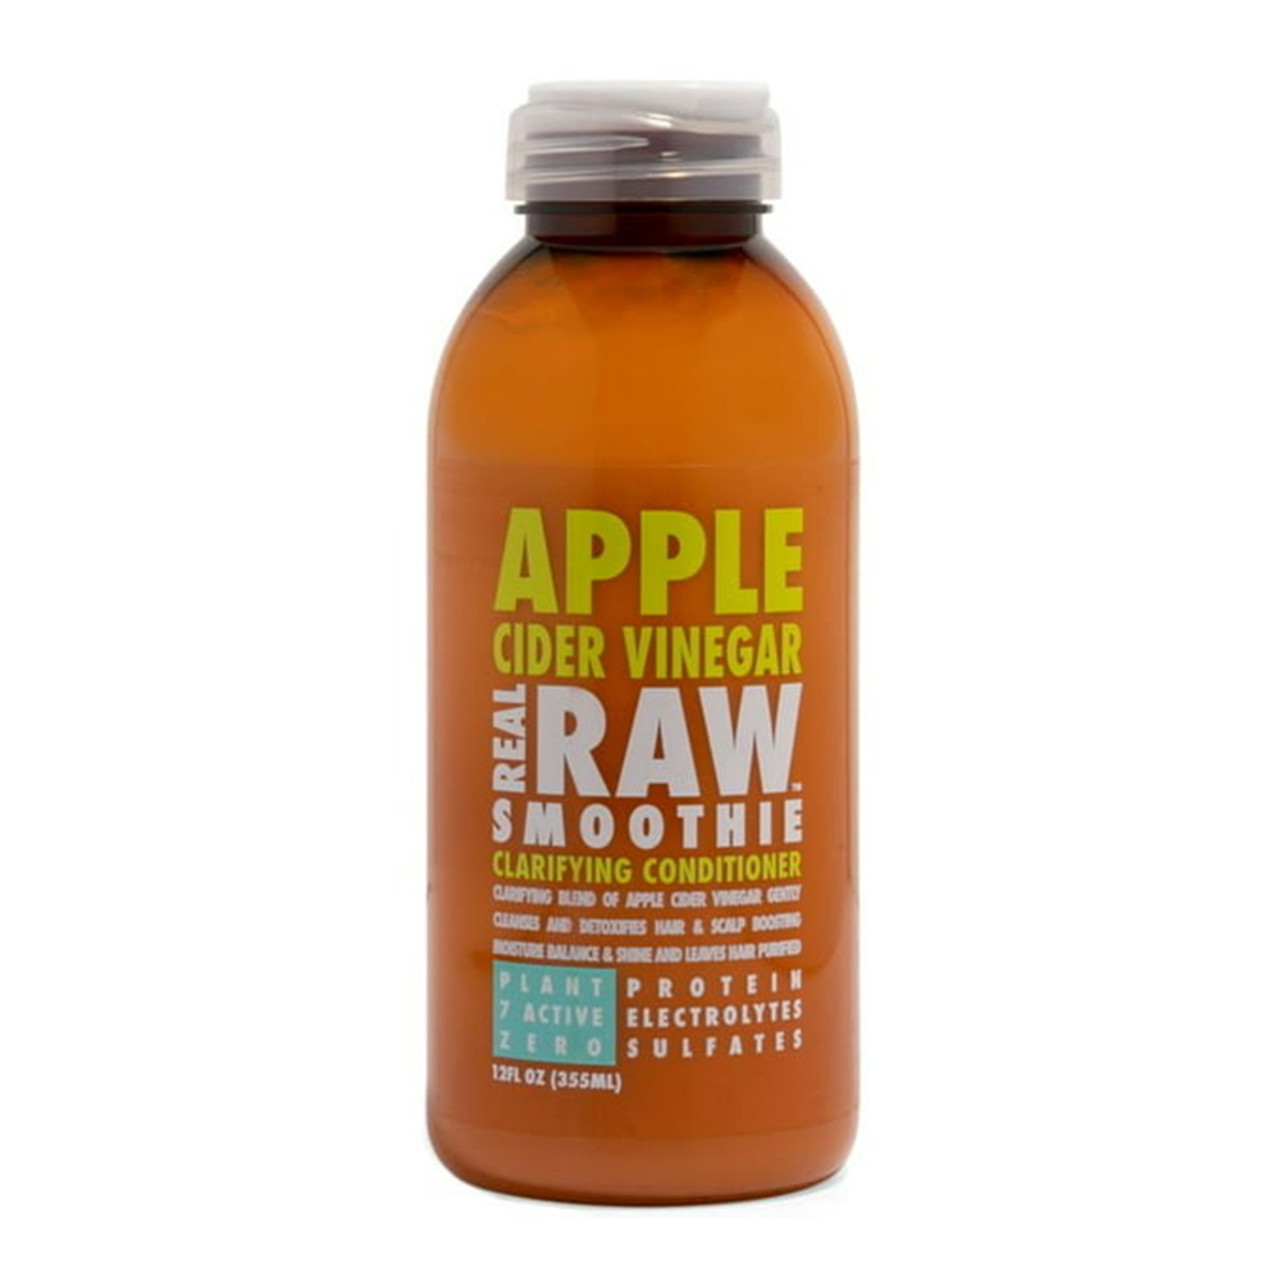 Real Raw Shampoothie Apple Cider Vinegar Clarifying Conditioner, 12 Oz